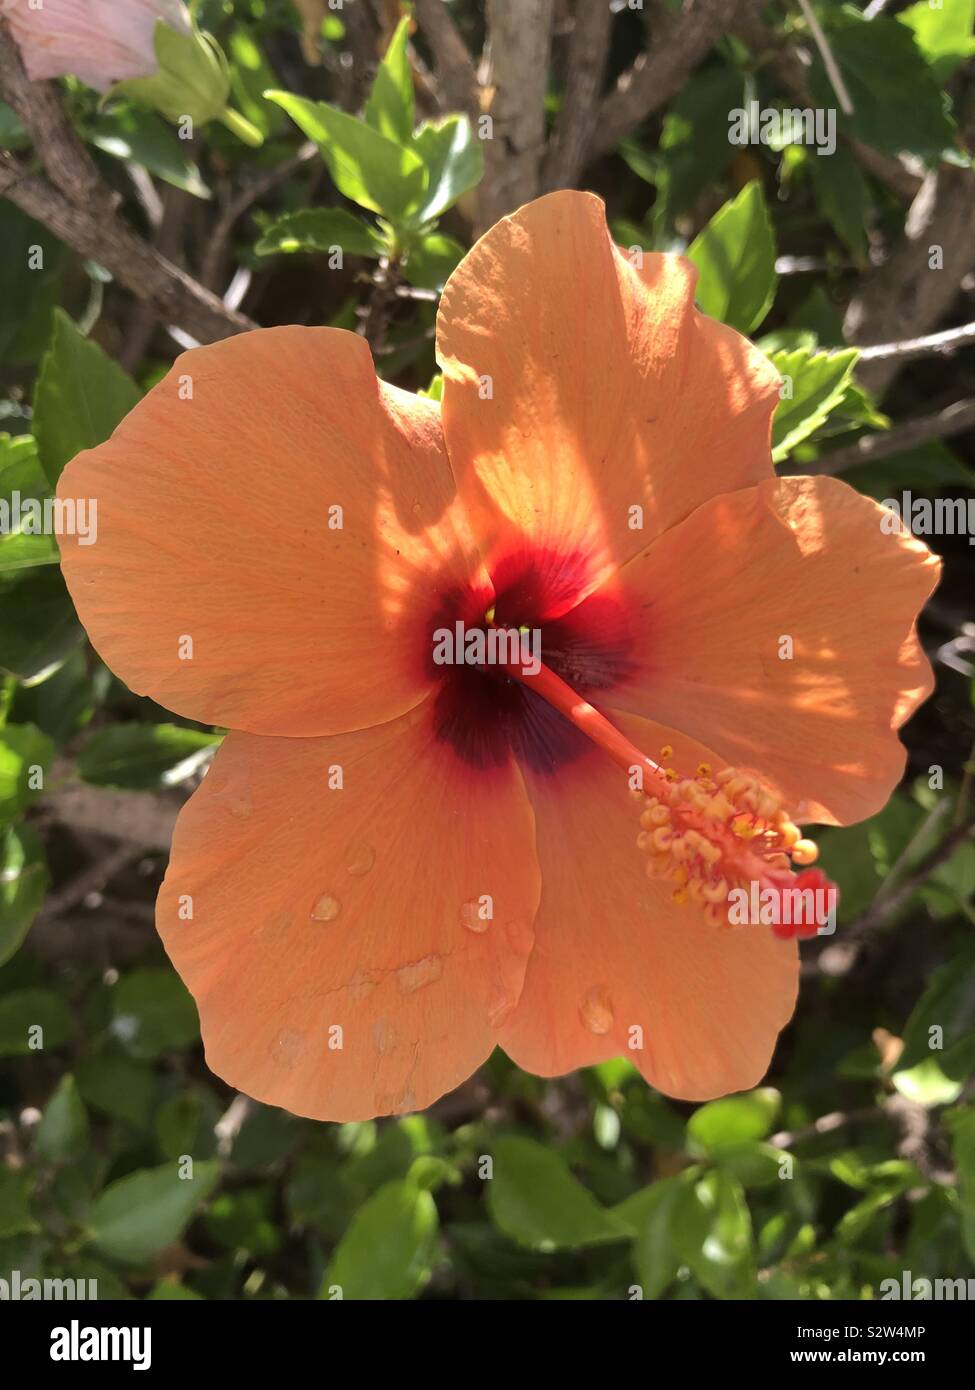 Orange flower from Spain Stock Photo